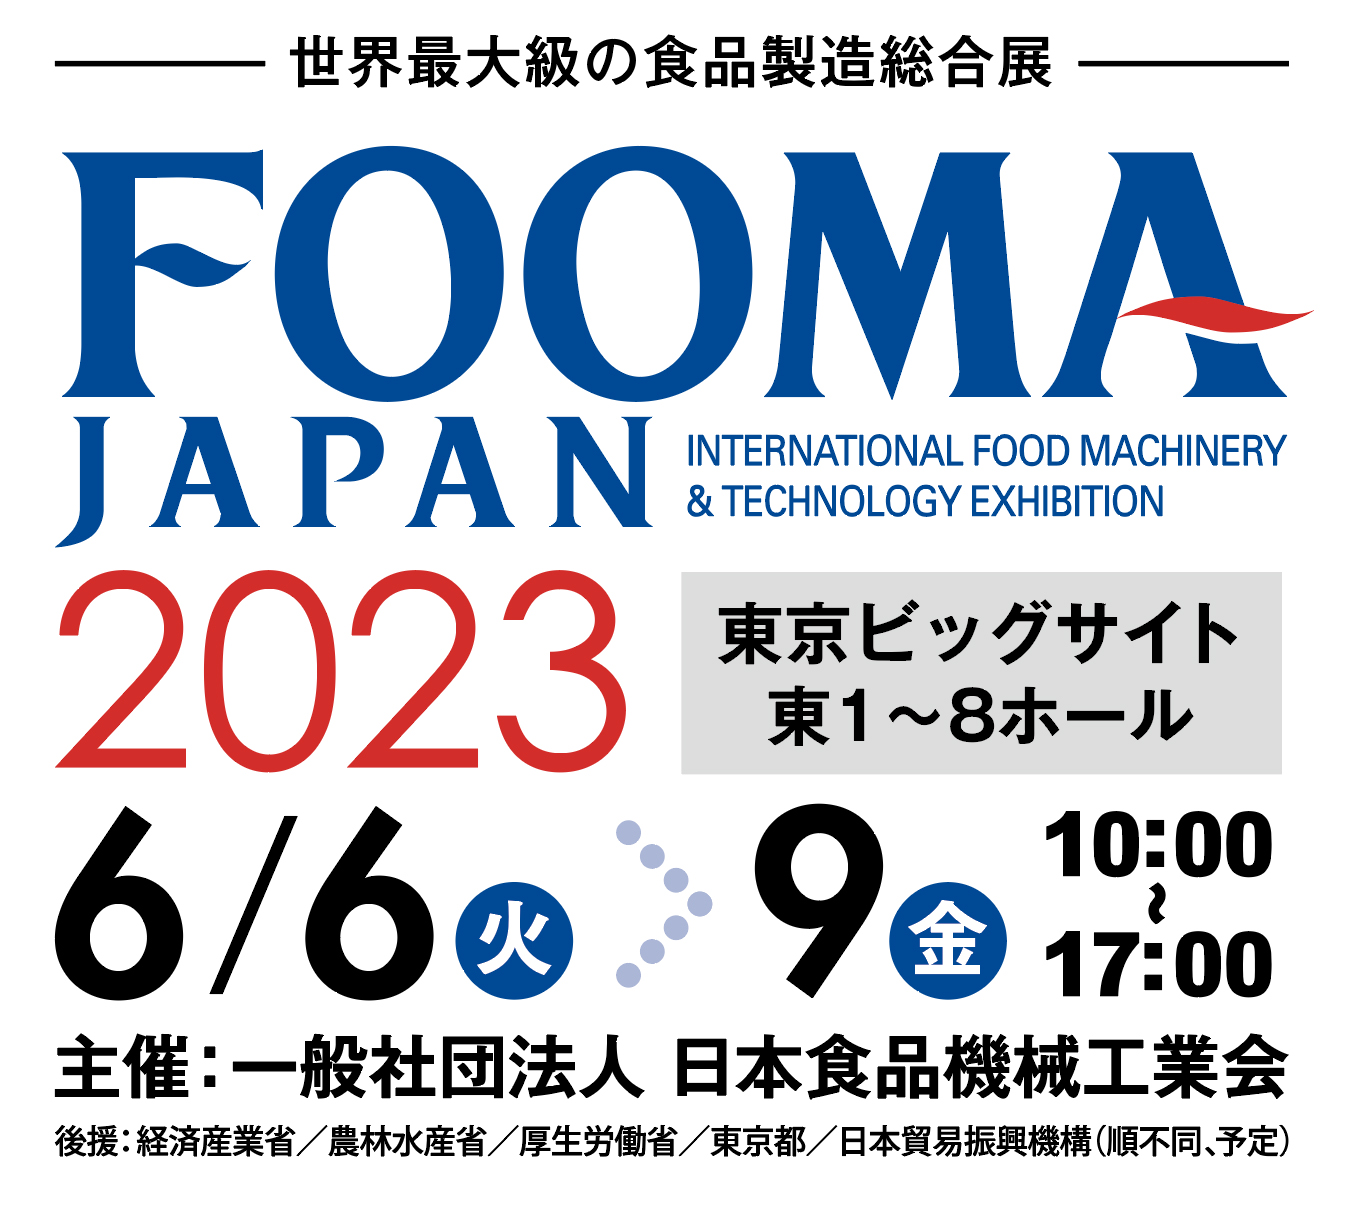 FOOMA JAPAN 2023ロゴ